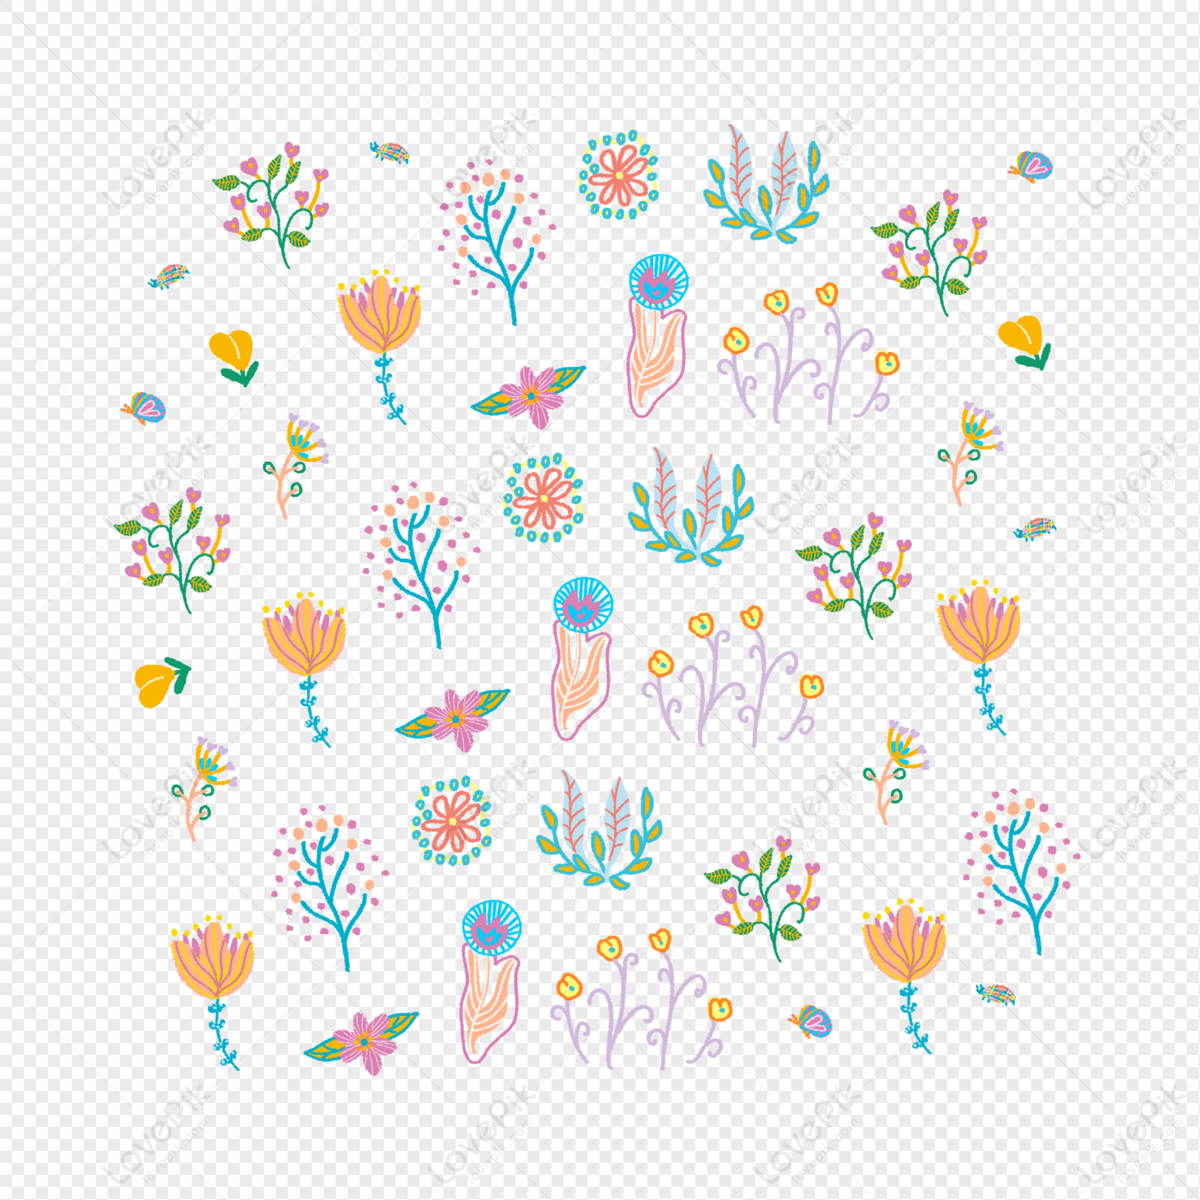 Flores Coloridas PNG Imagens Gratuitas Para Download - Lovepik